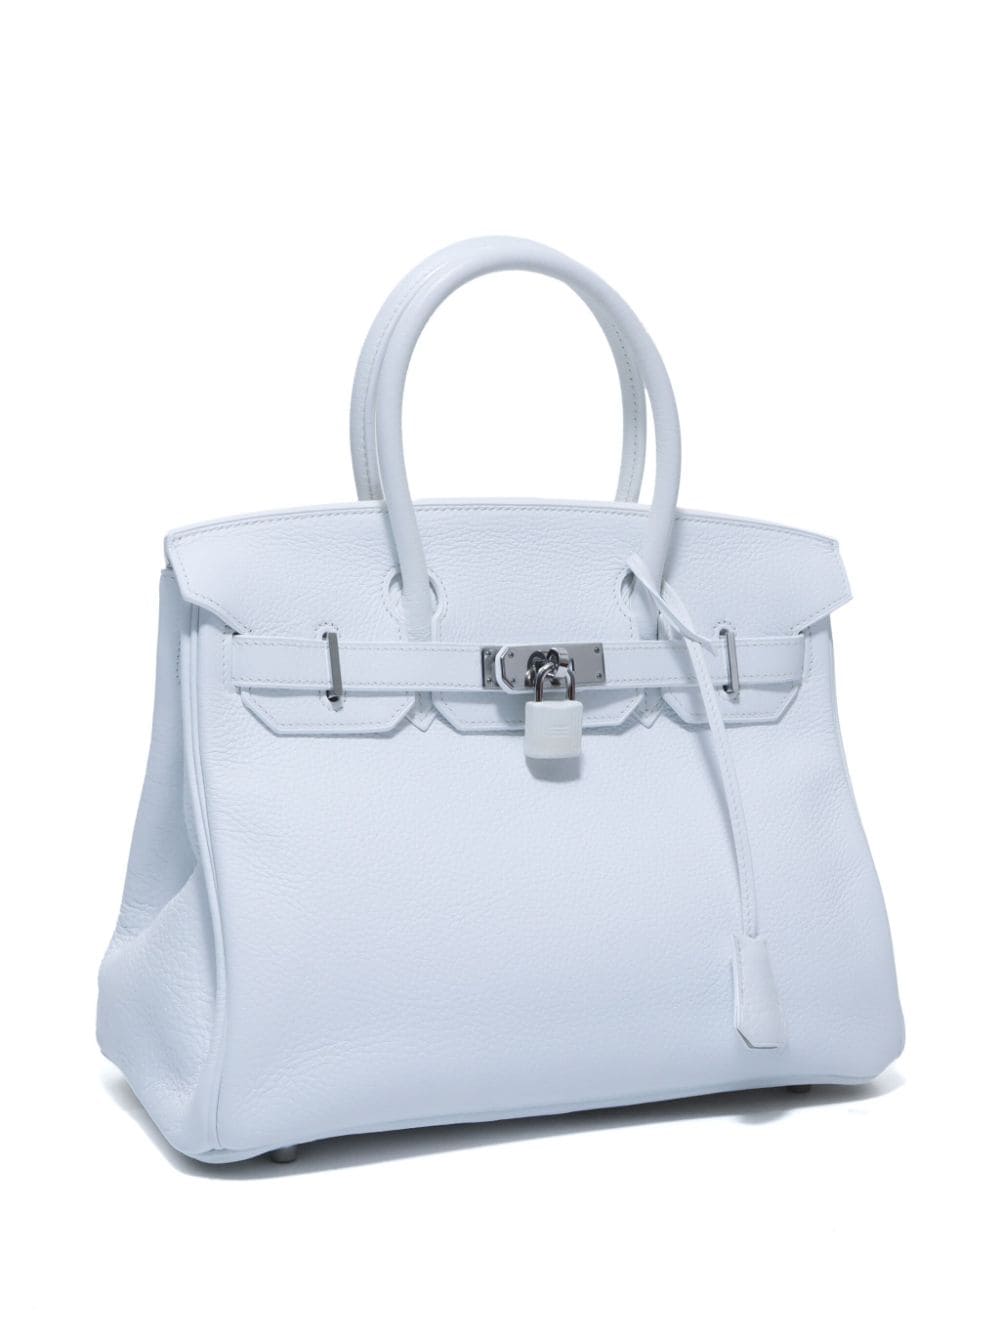 Hermès 2005 Birkin 30 Handbag